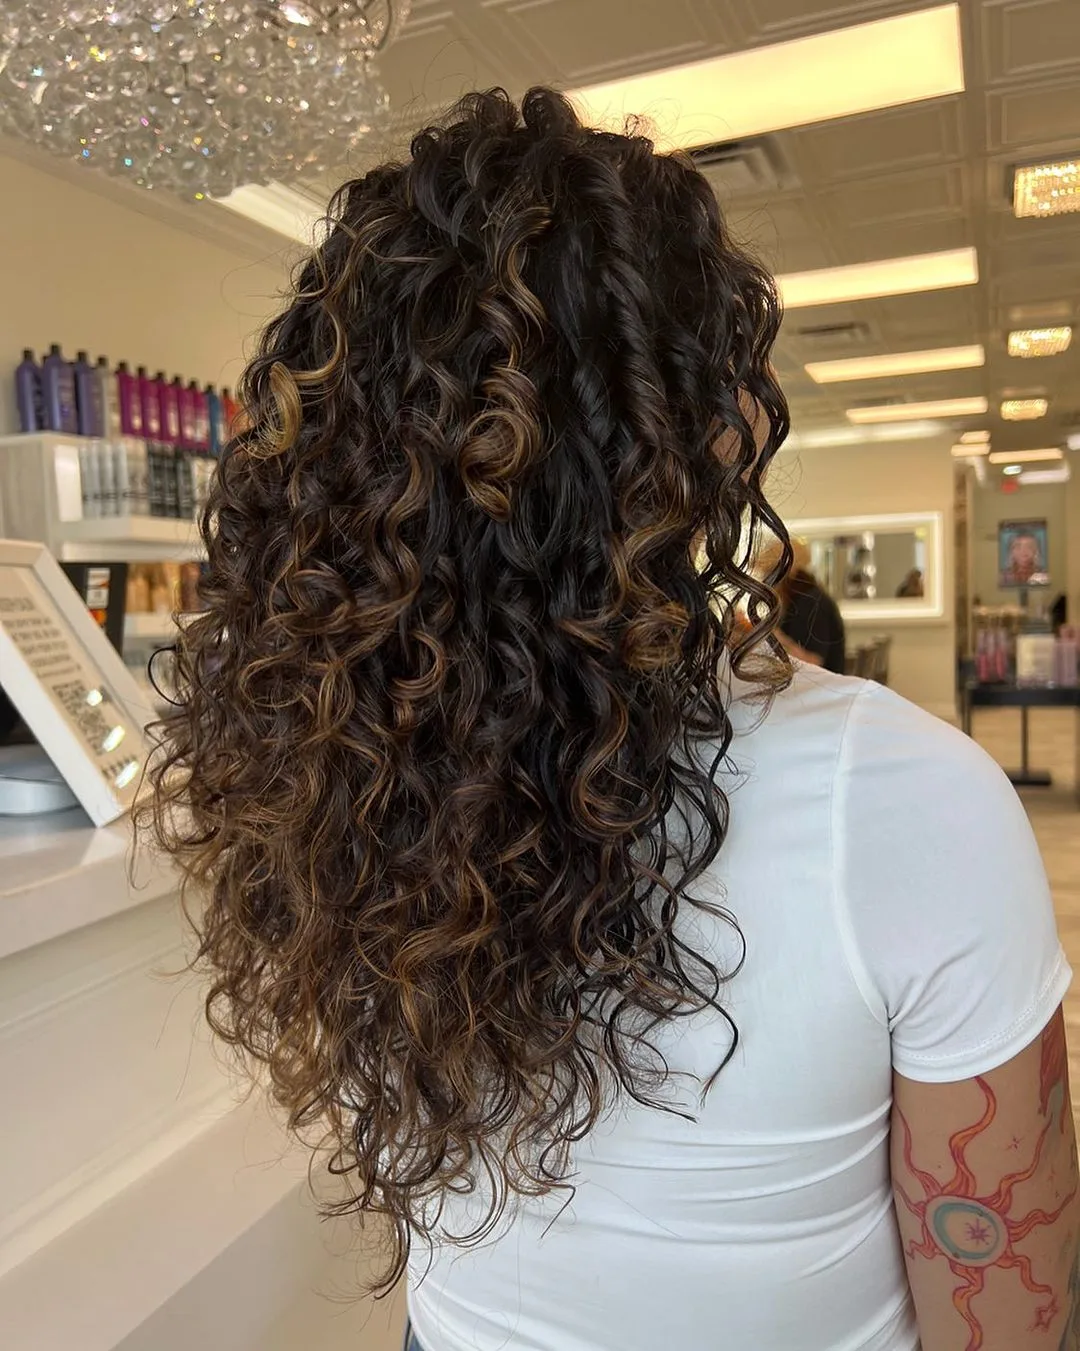 V-shaped voluminous curls